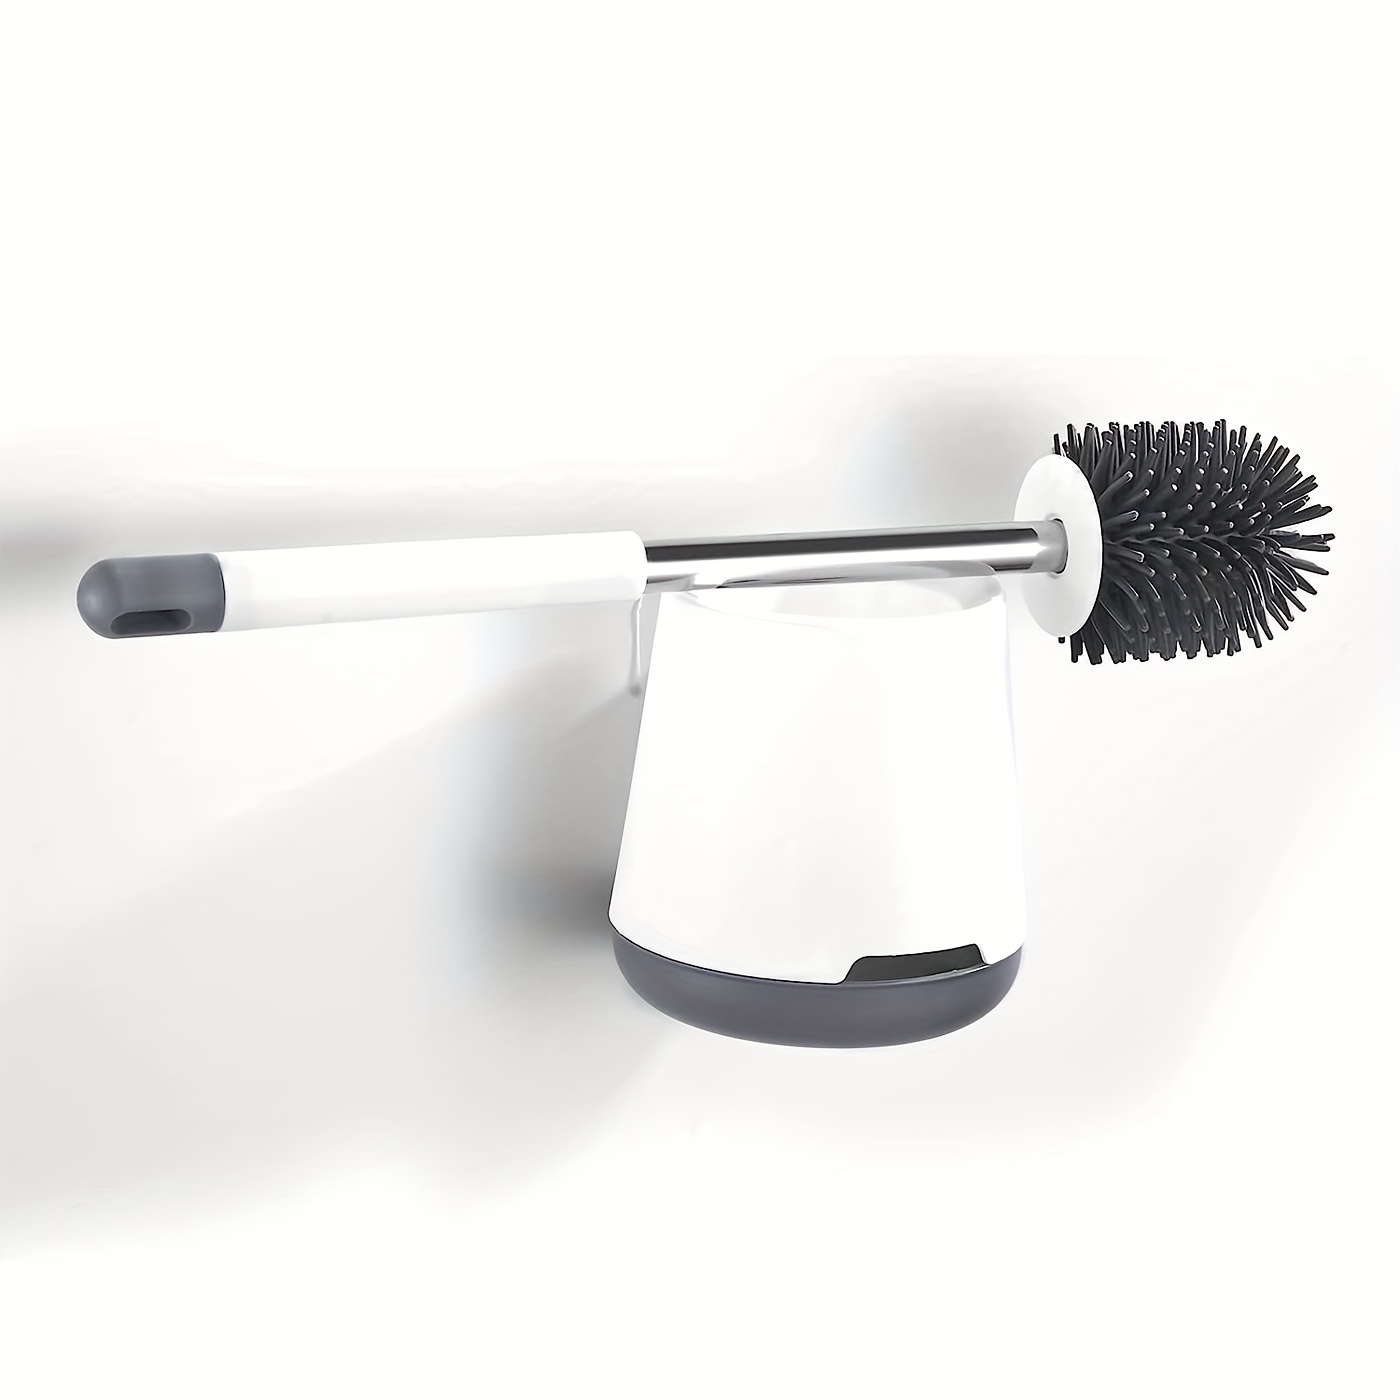 OXO Good Grips Toilet Brush, White